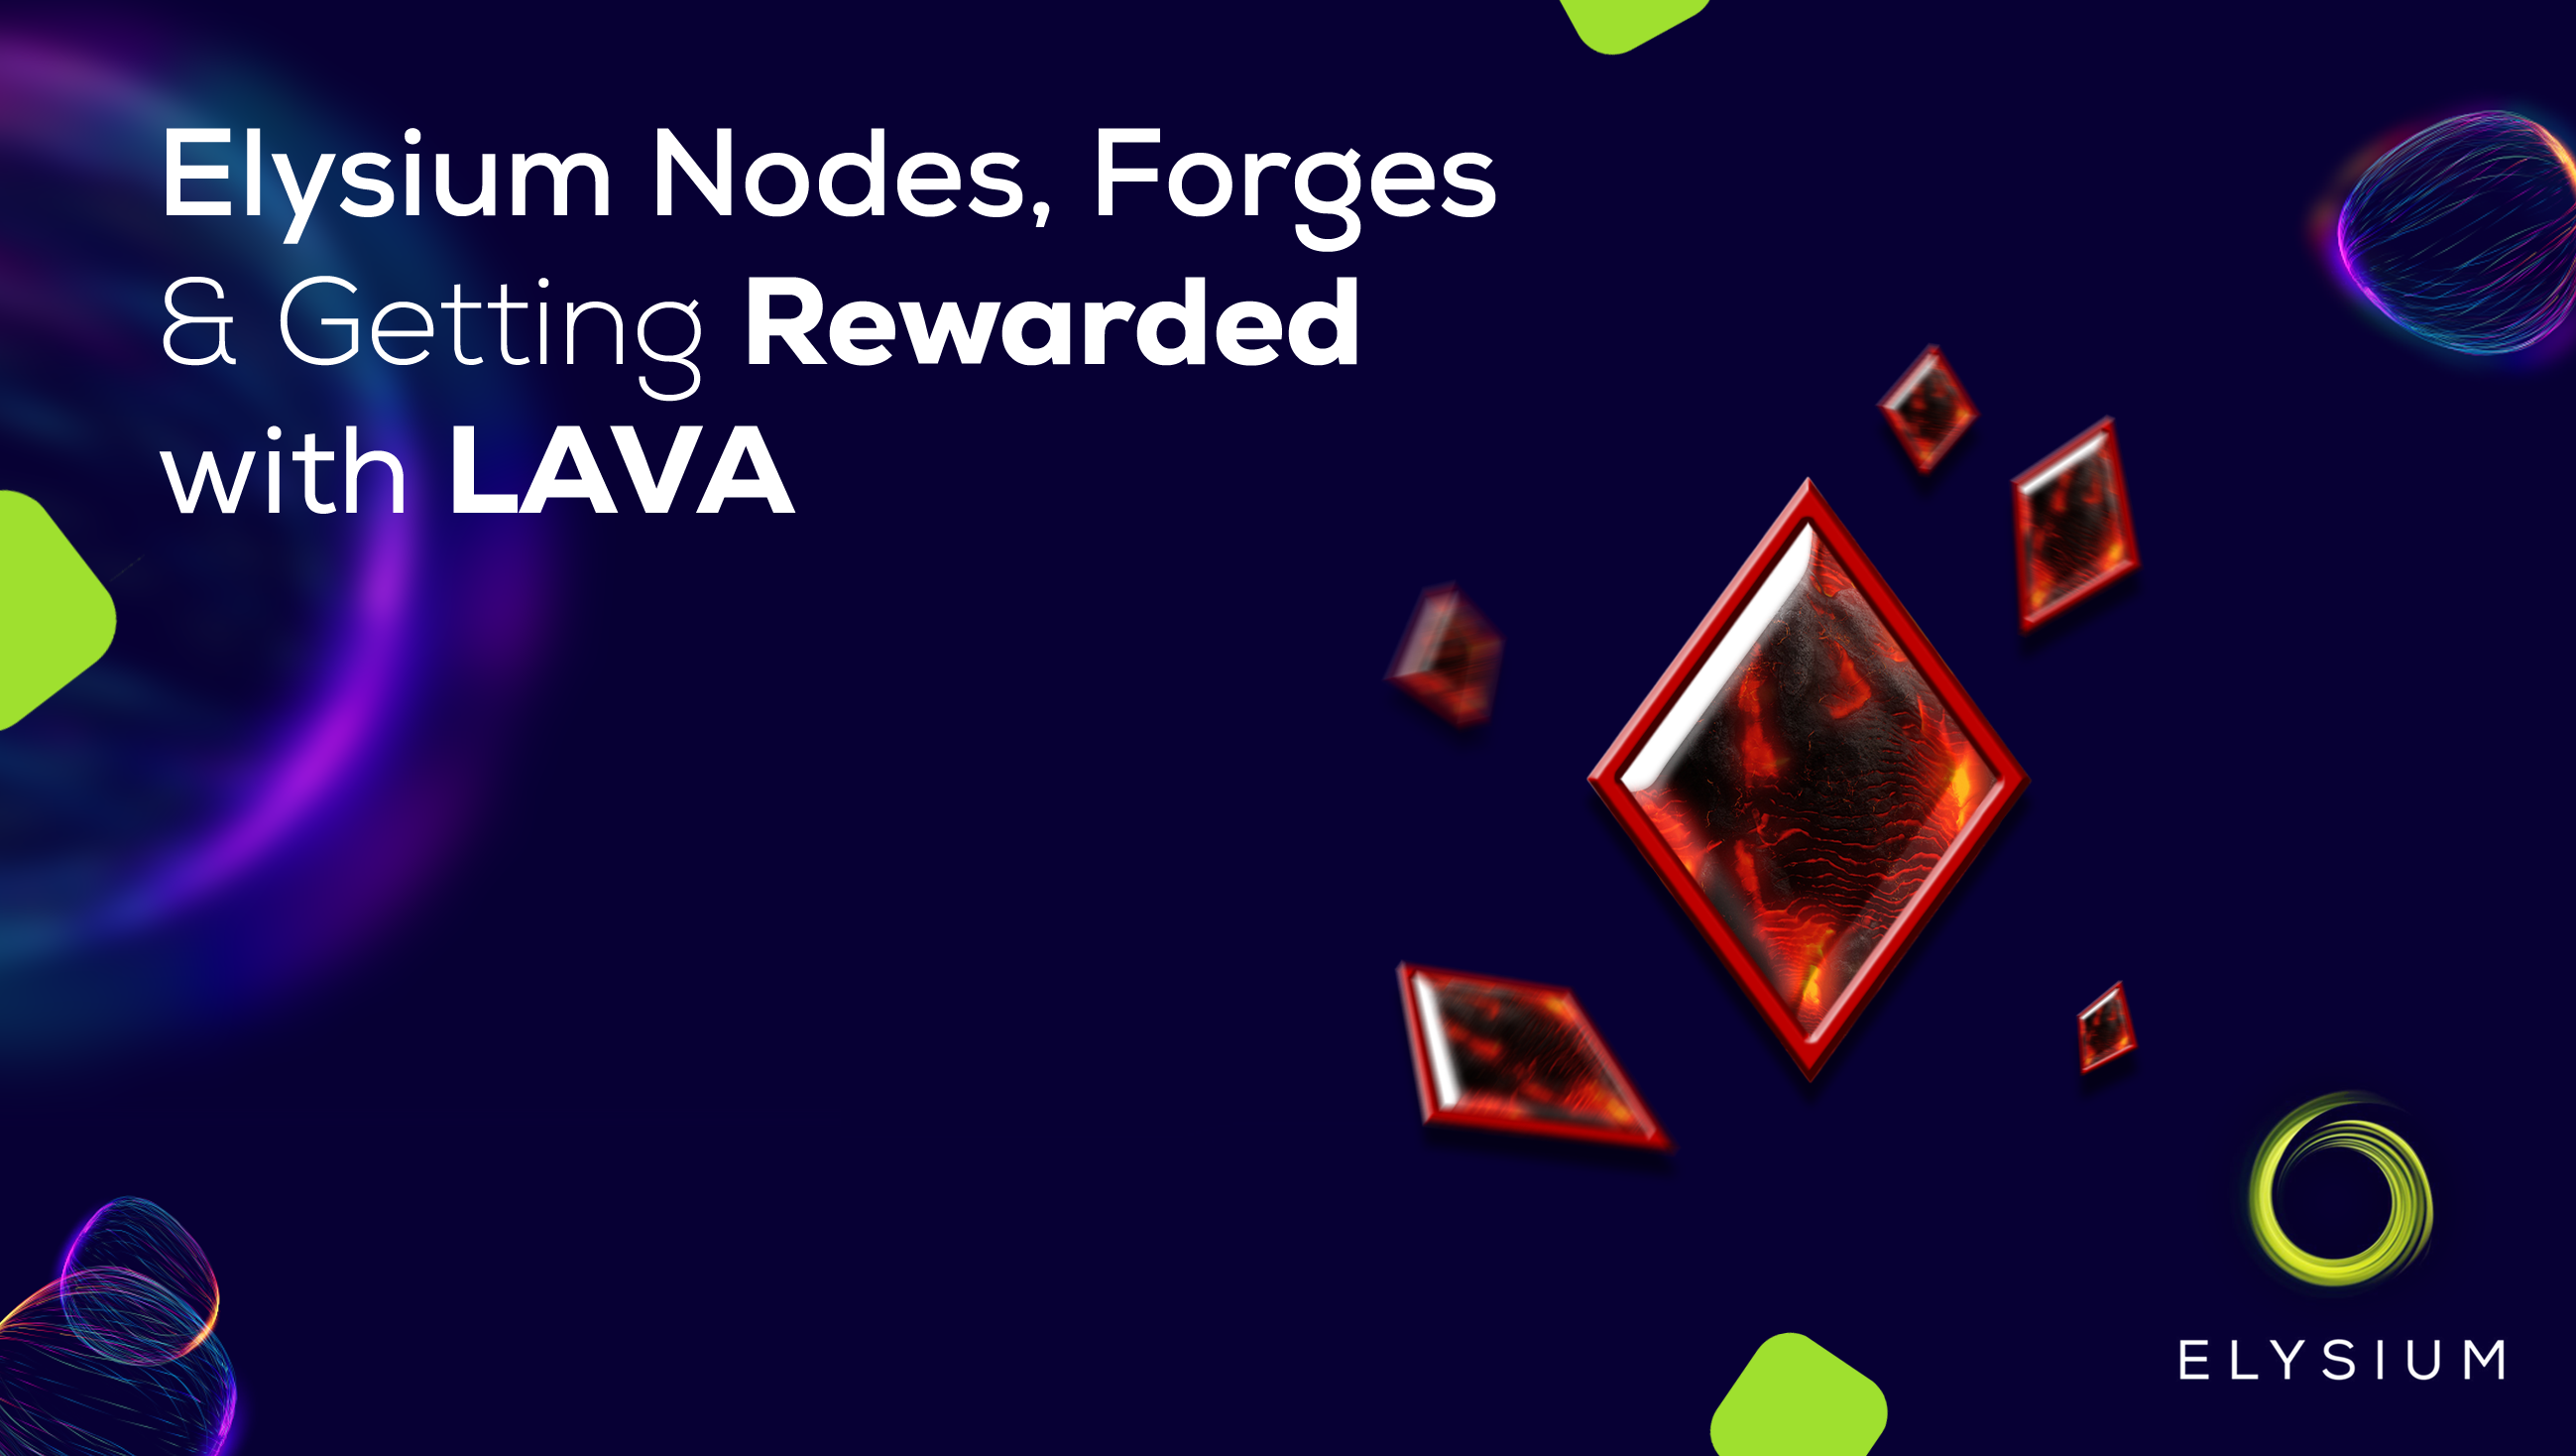 Elysium blockchain nodes, Forges and LAVA rewards